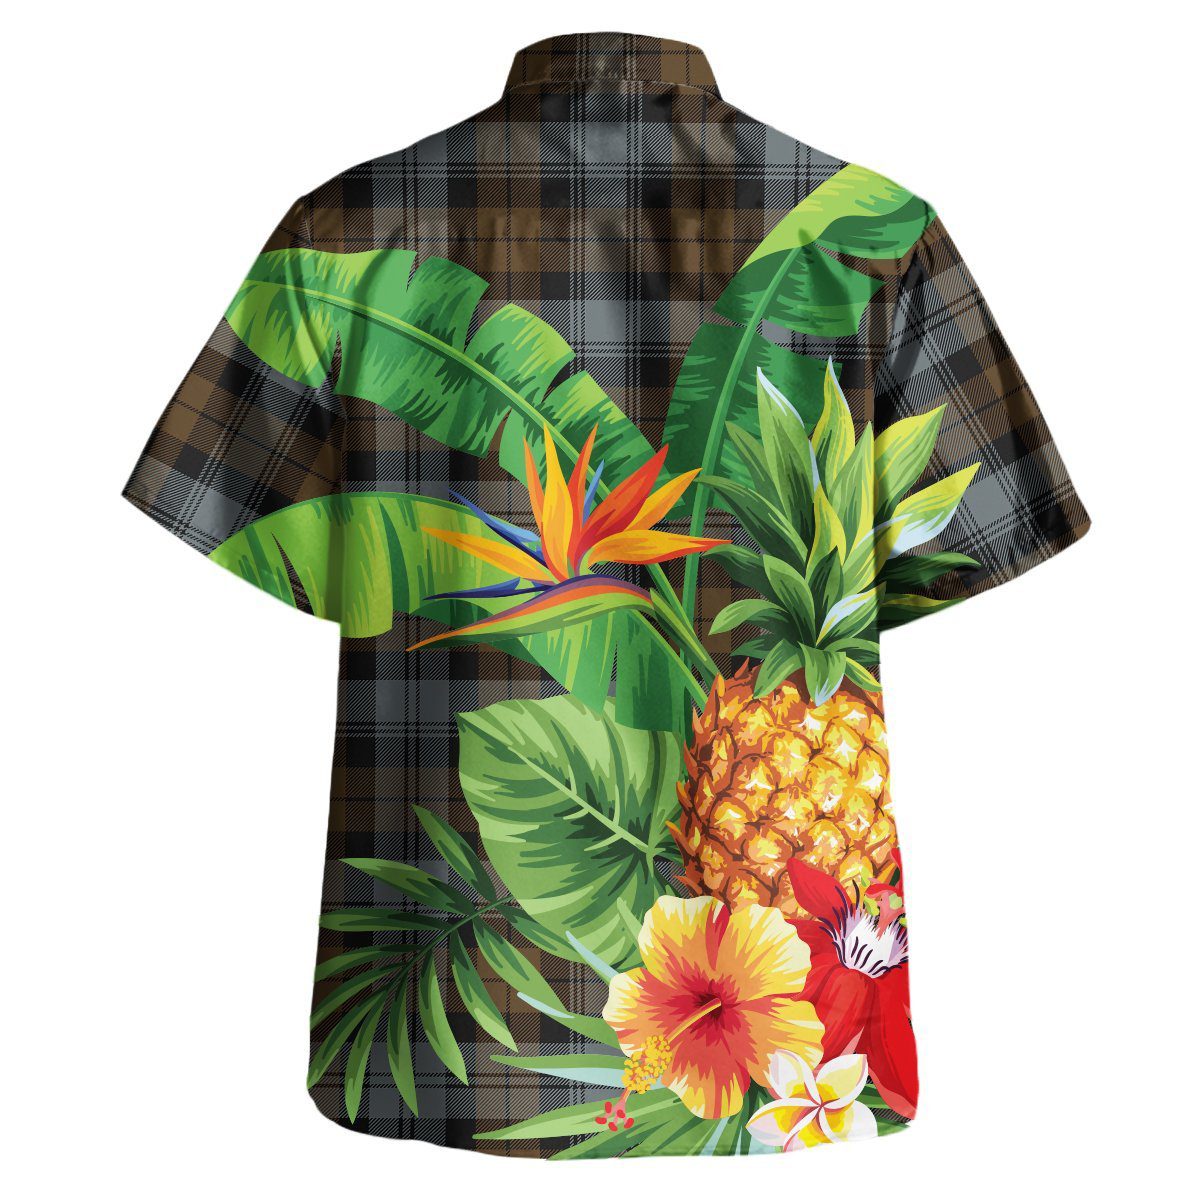 BlackWatch Weathered Tartan Aloha Shirt version 2